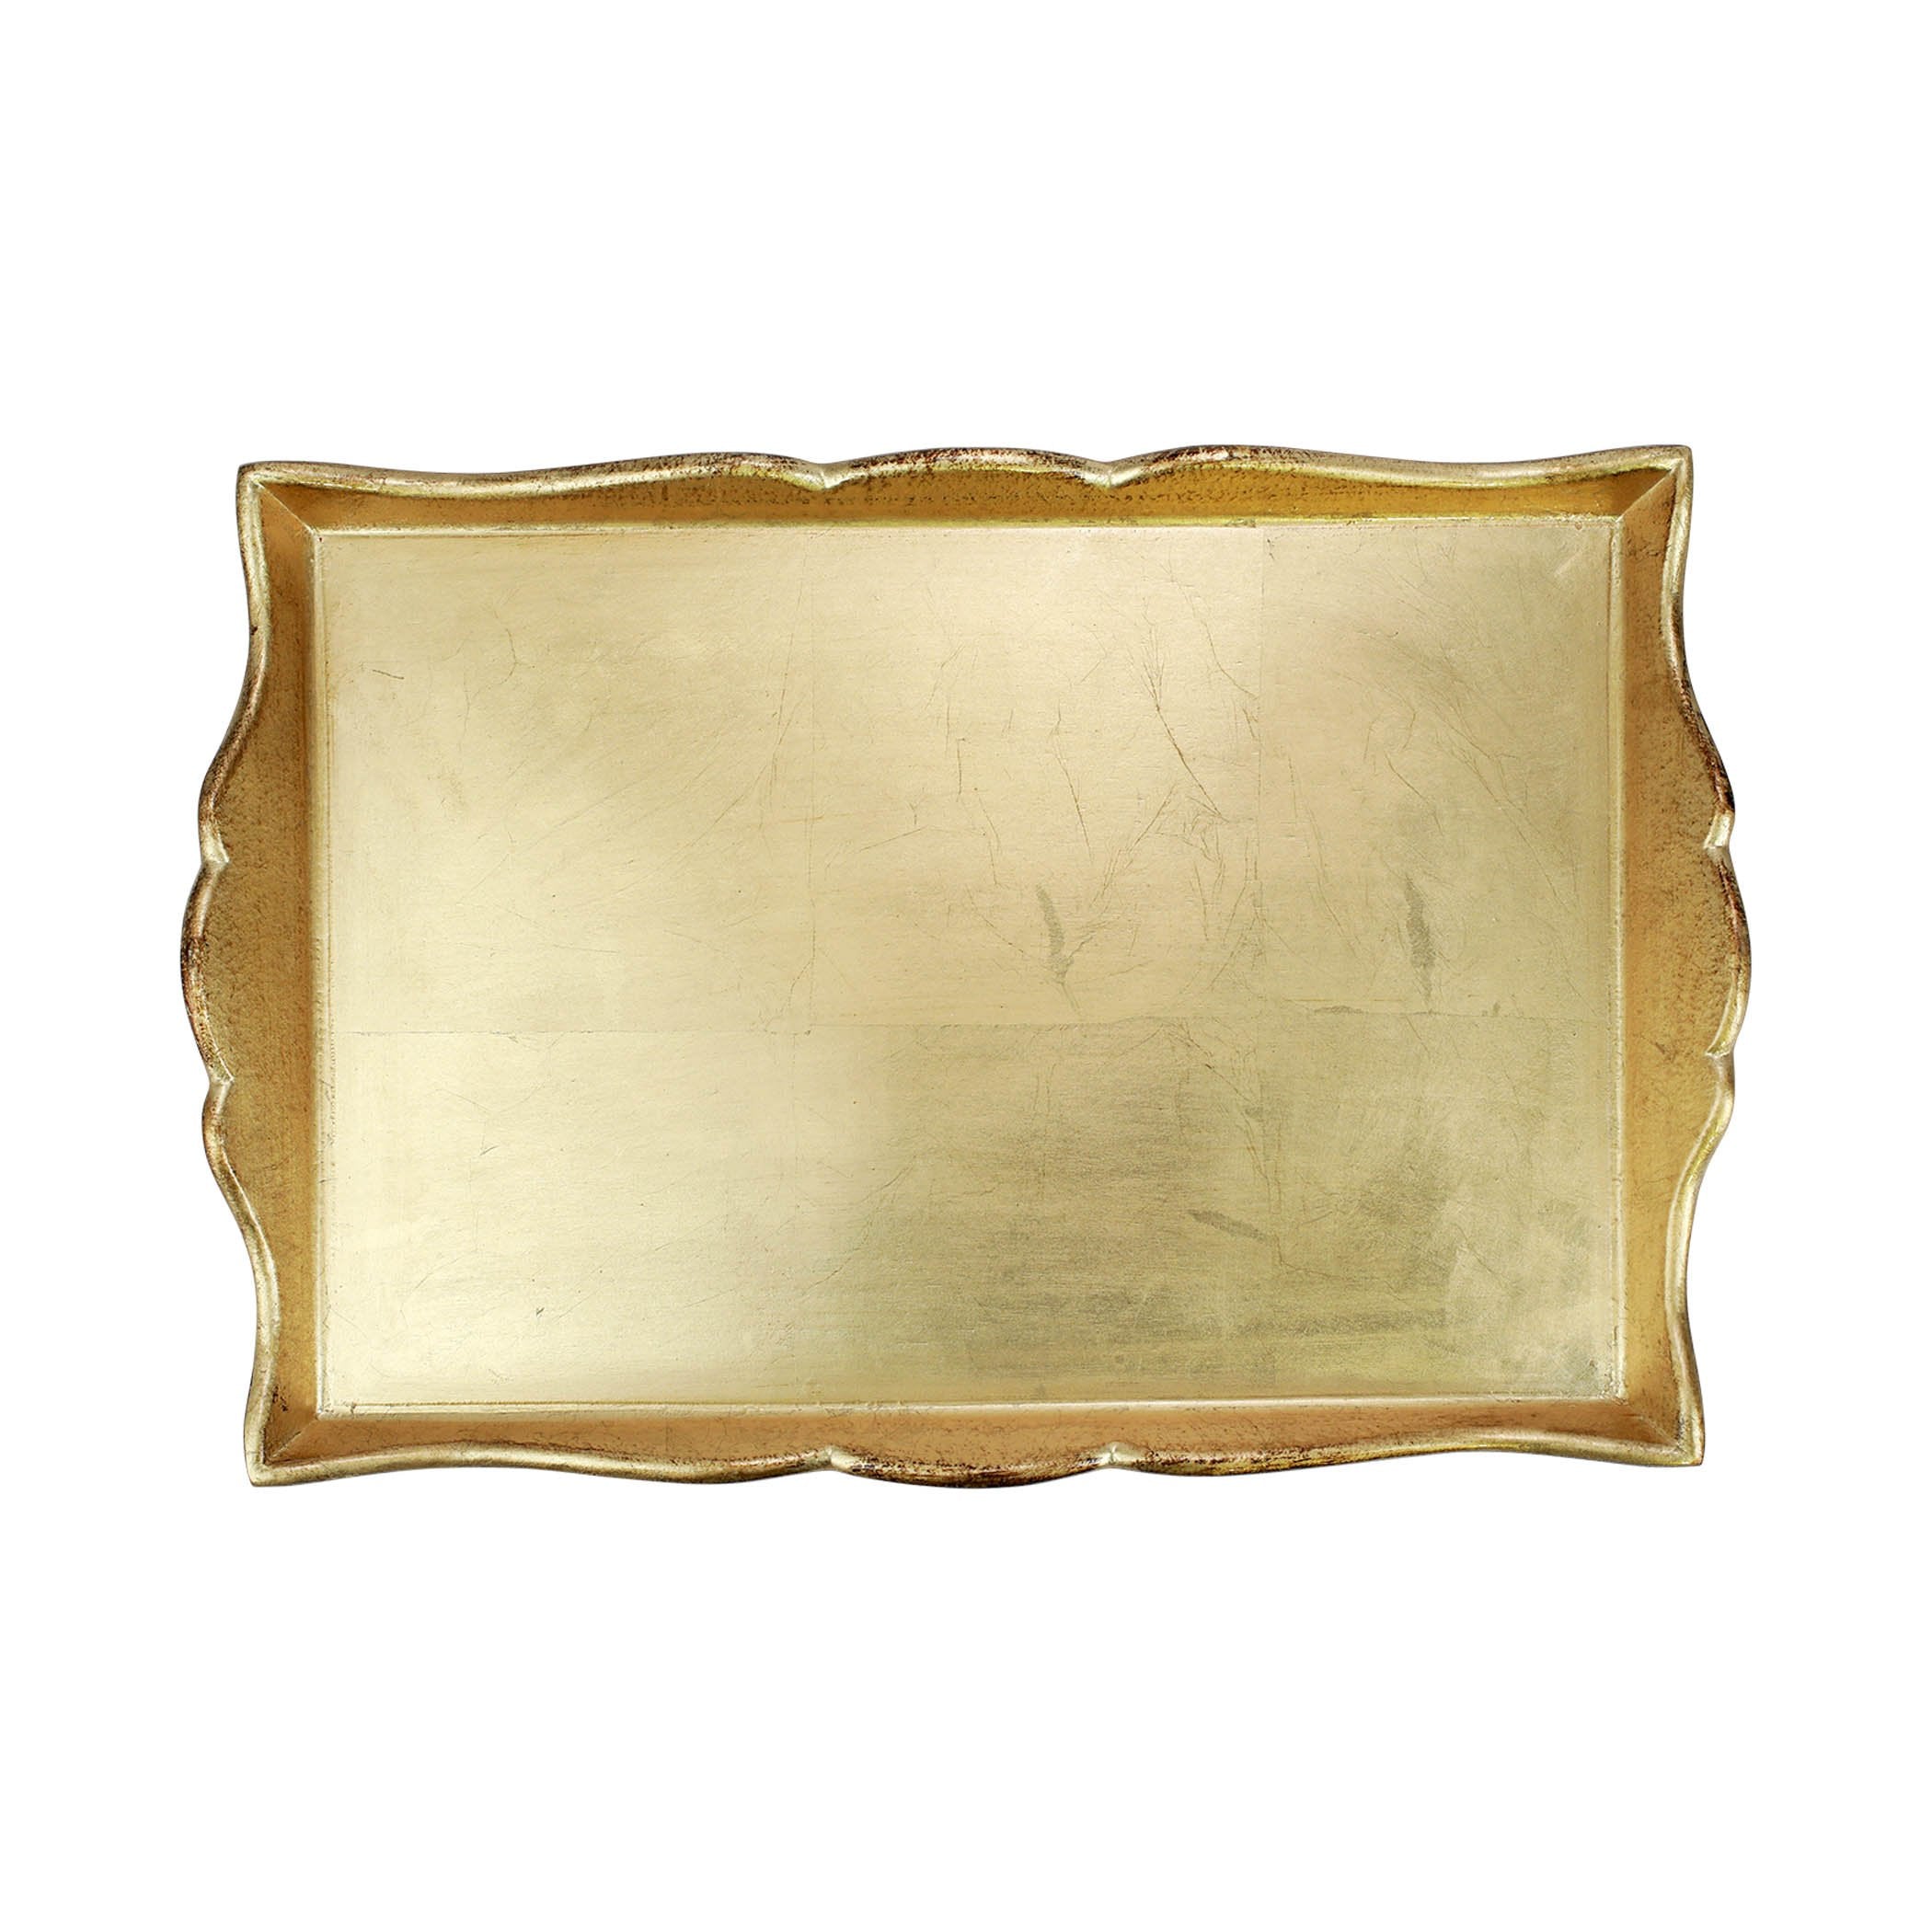 Florentine Wooden Accessories Gold Handled Rectangular Medium Tray